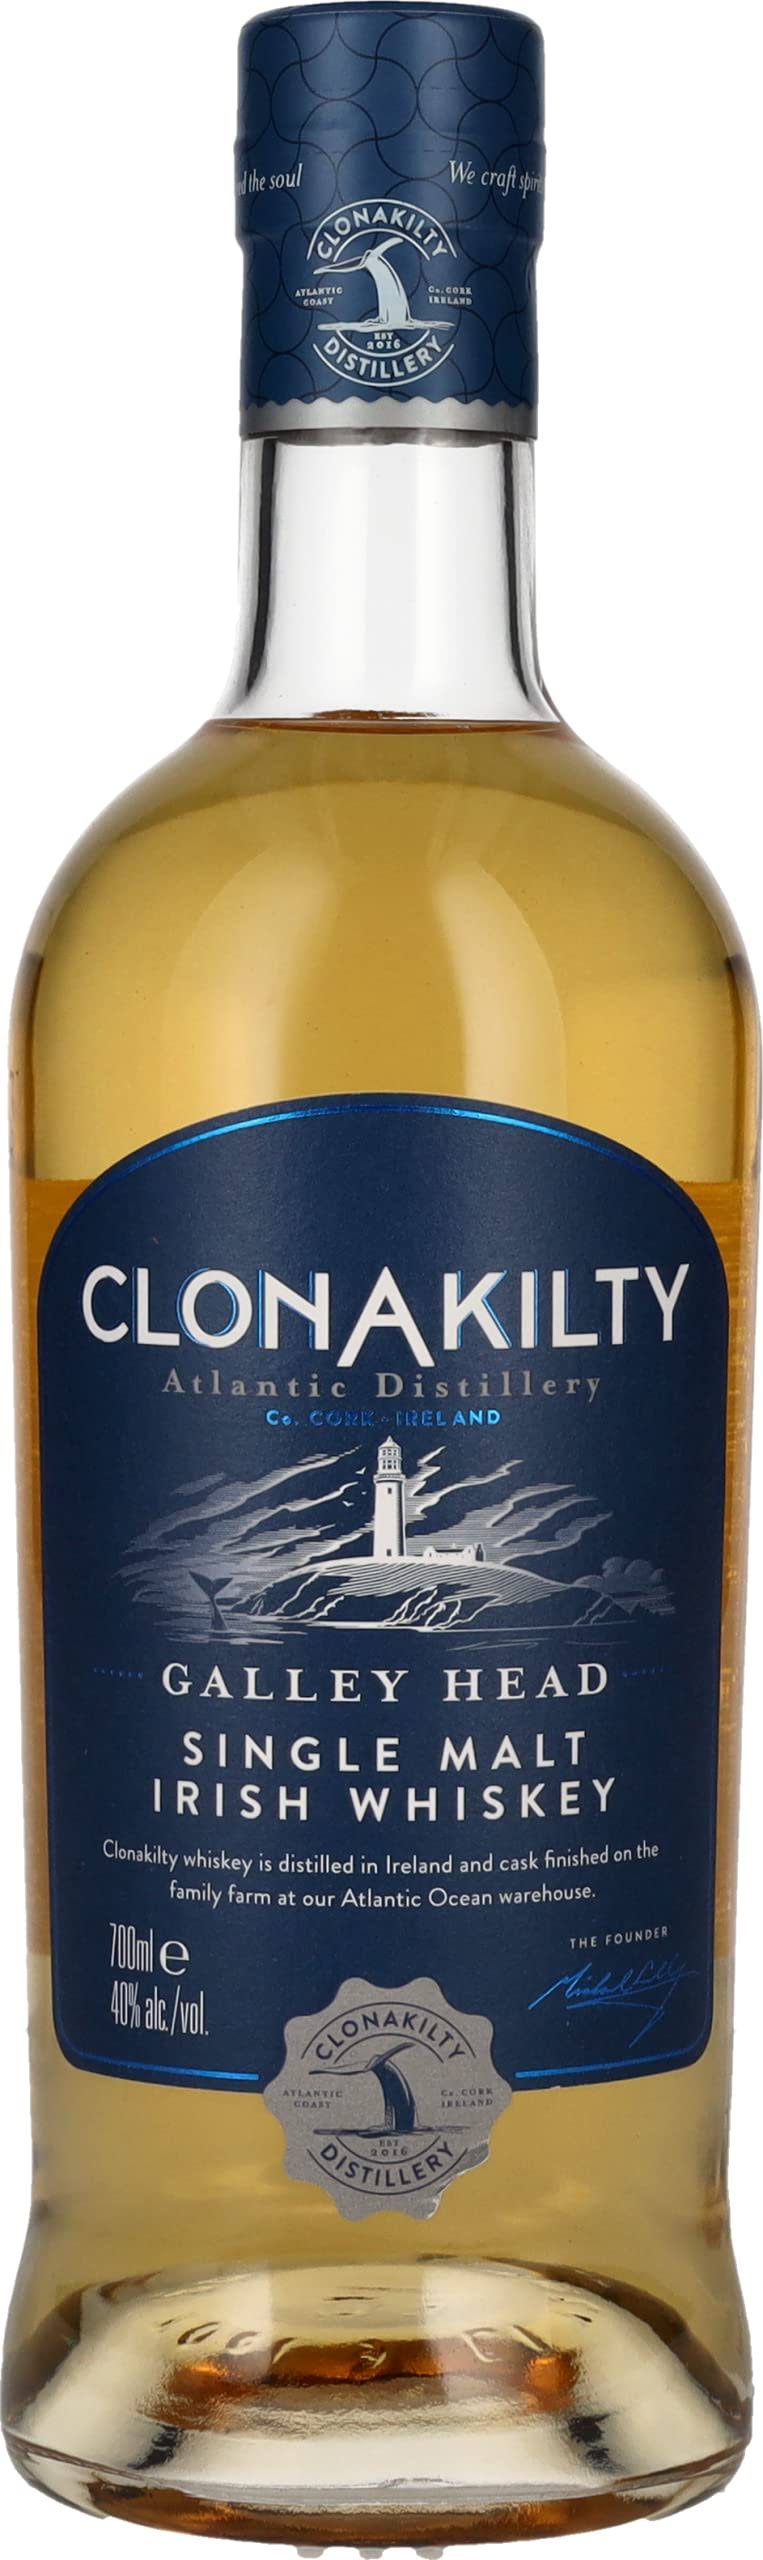 Clonakilty Galley Head Single Malt Irish Whiskey 70cl